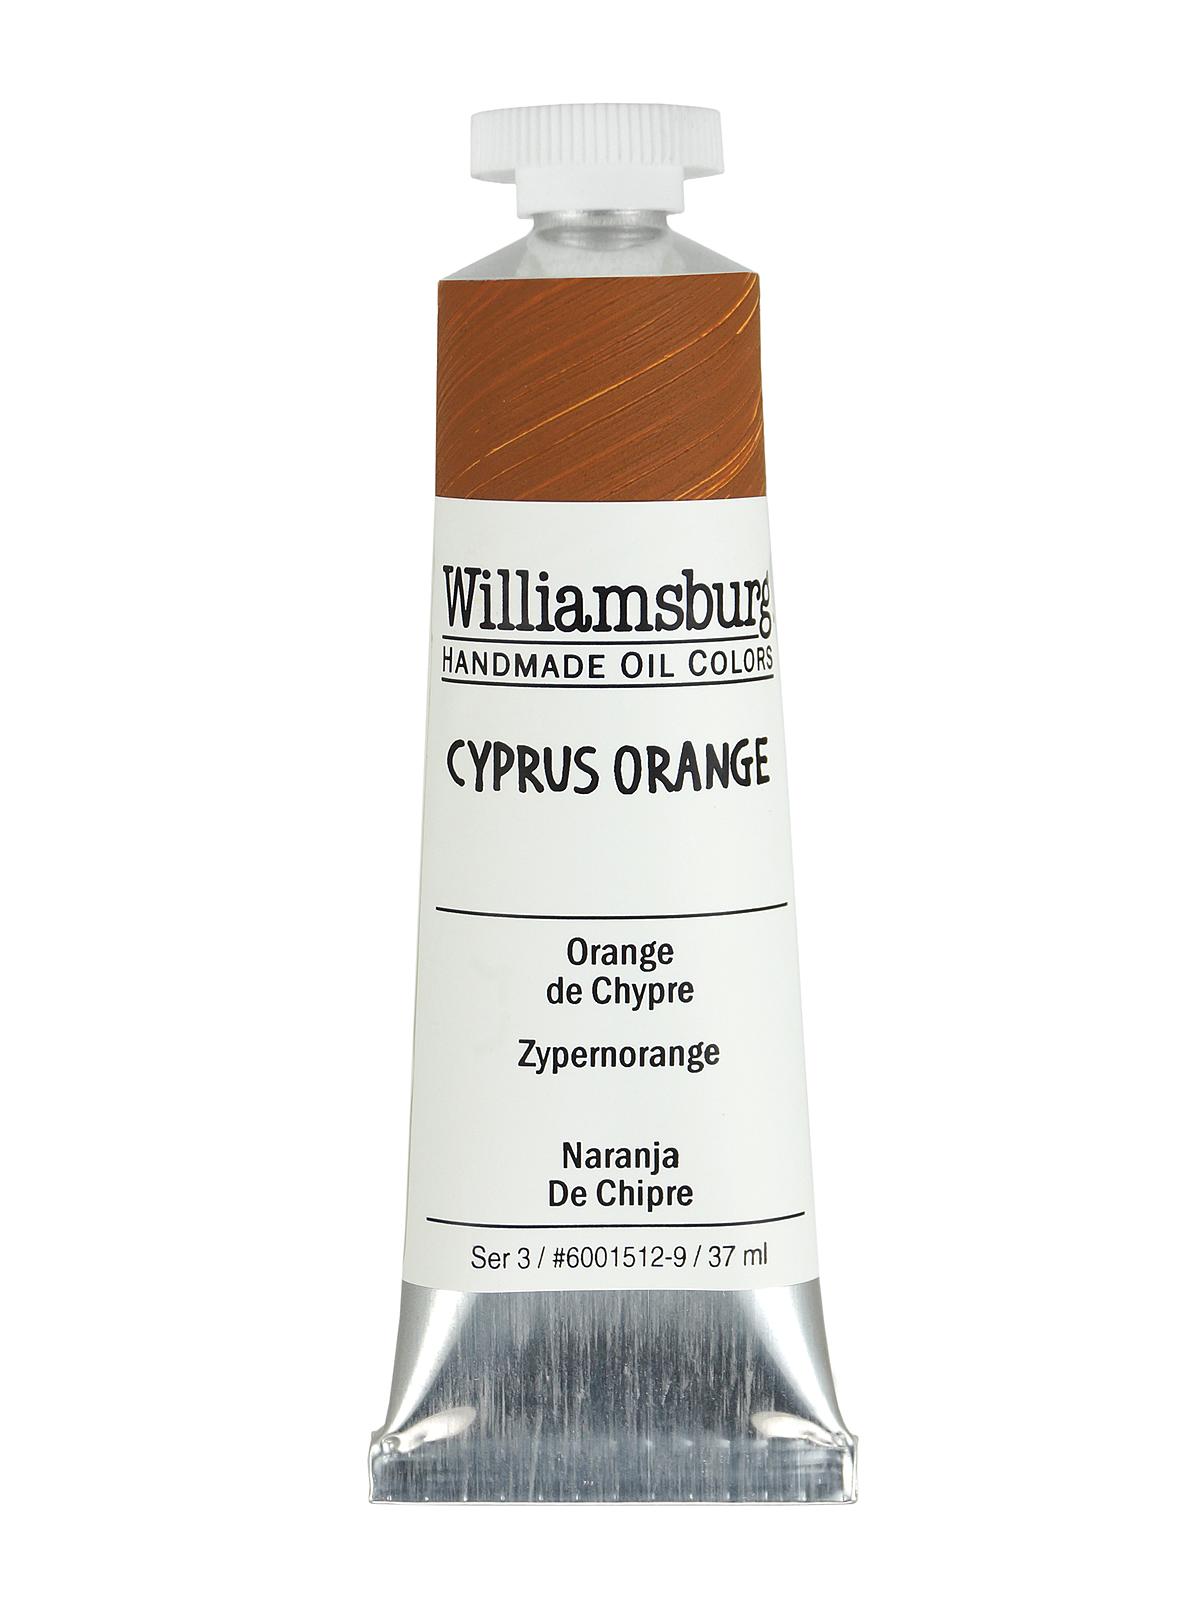 Handmade Oil Colors Cyprus Orange 37 Ml